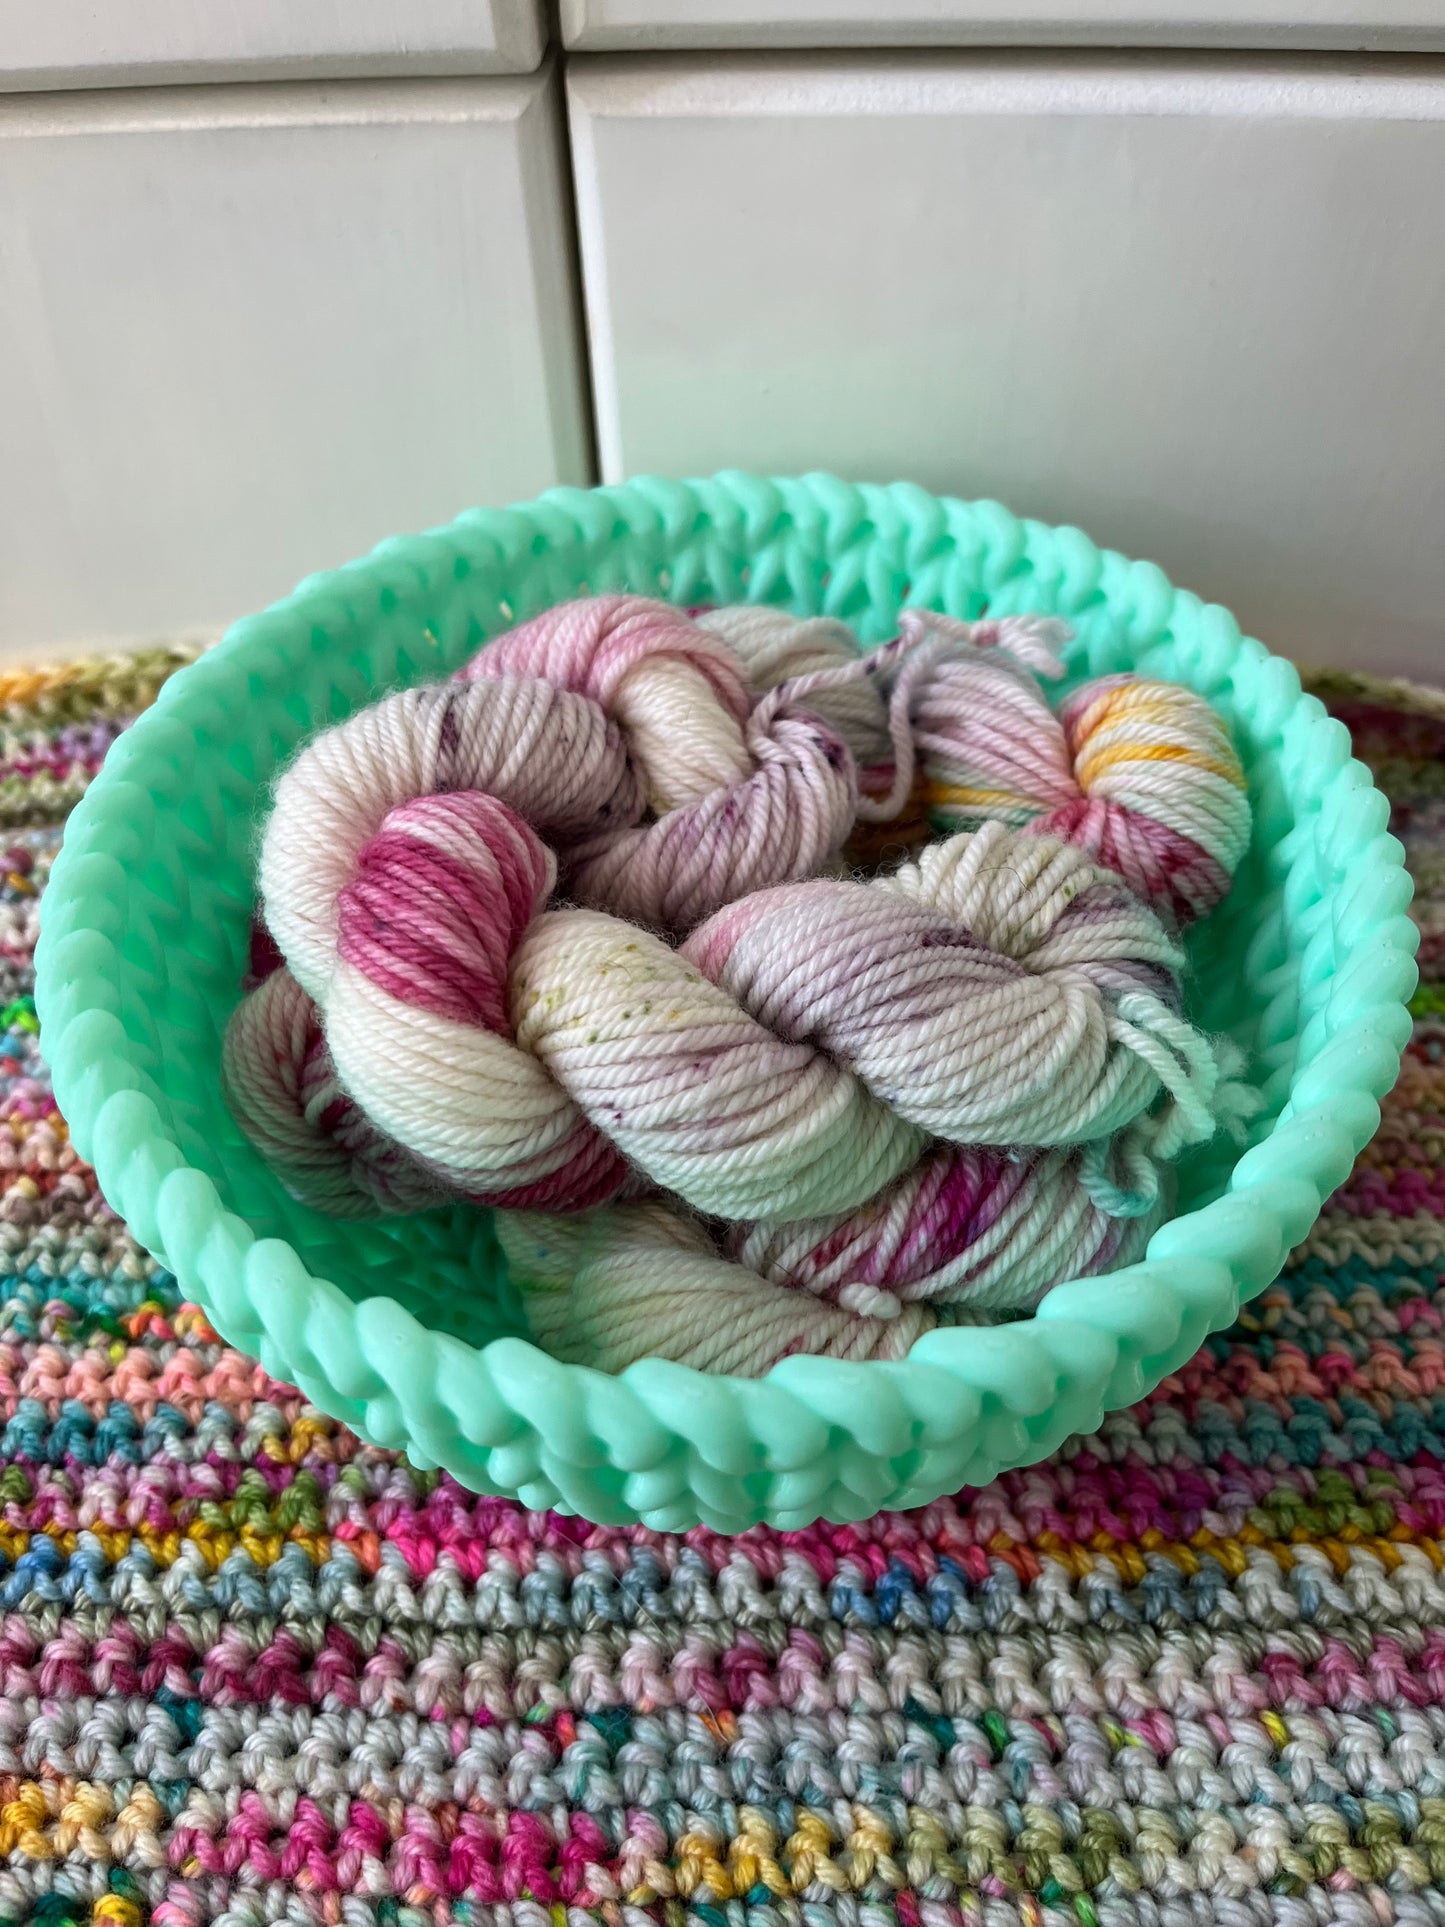 3D Printed Knitted Look Bowl, Yarn Storage, Trinket Dish, Crochet Photo Props